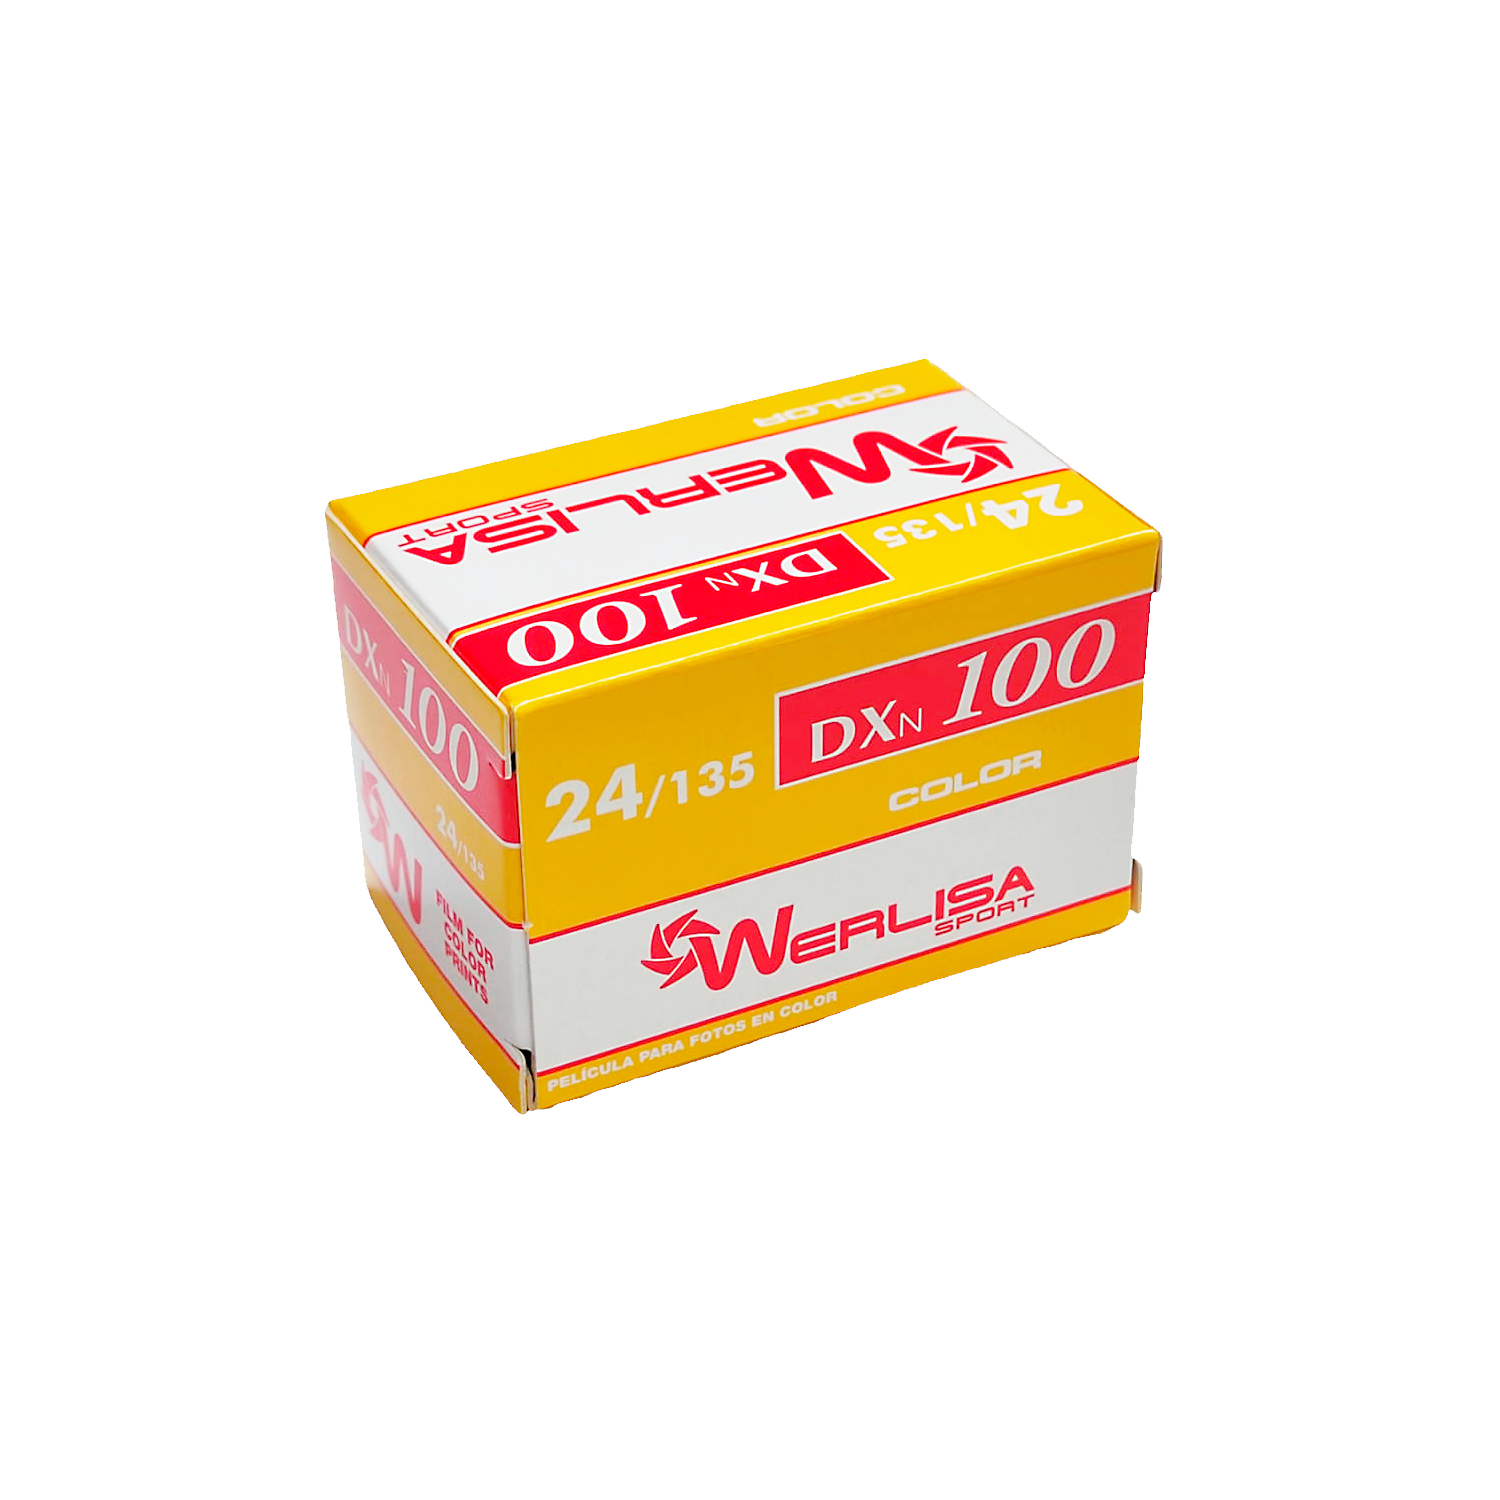 Werlisa 100 - 35mm expiré